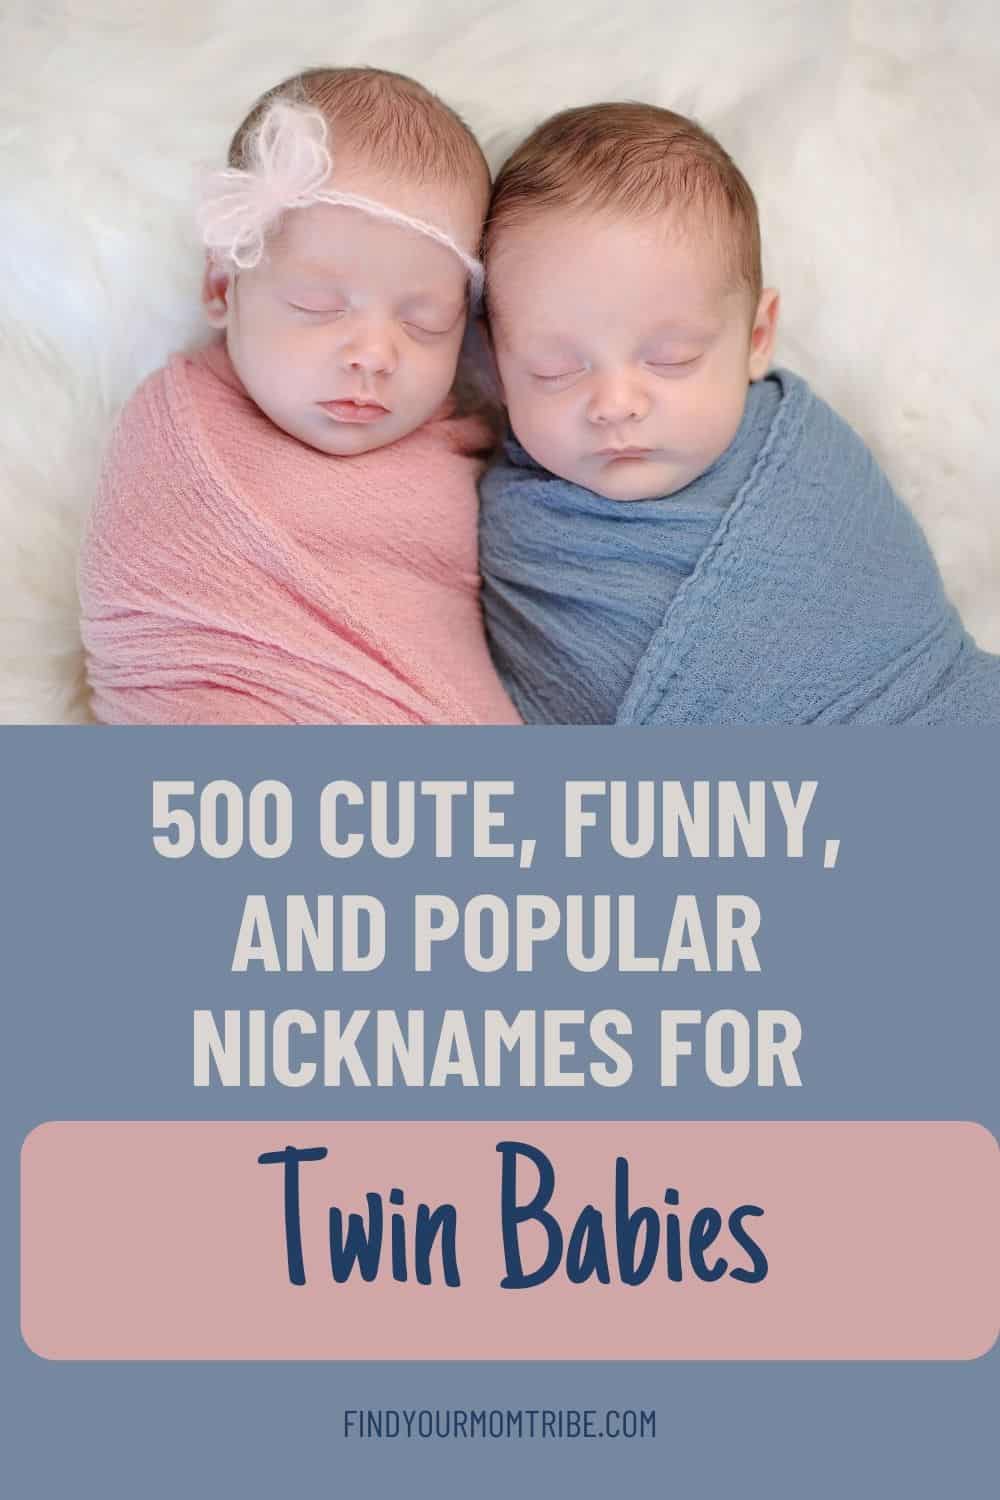 Pinterest nicknames for twin babies 